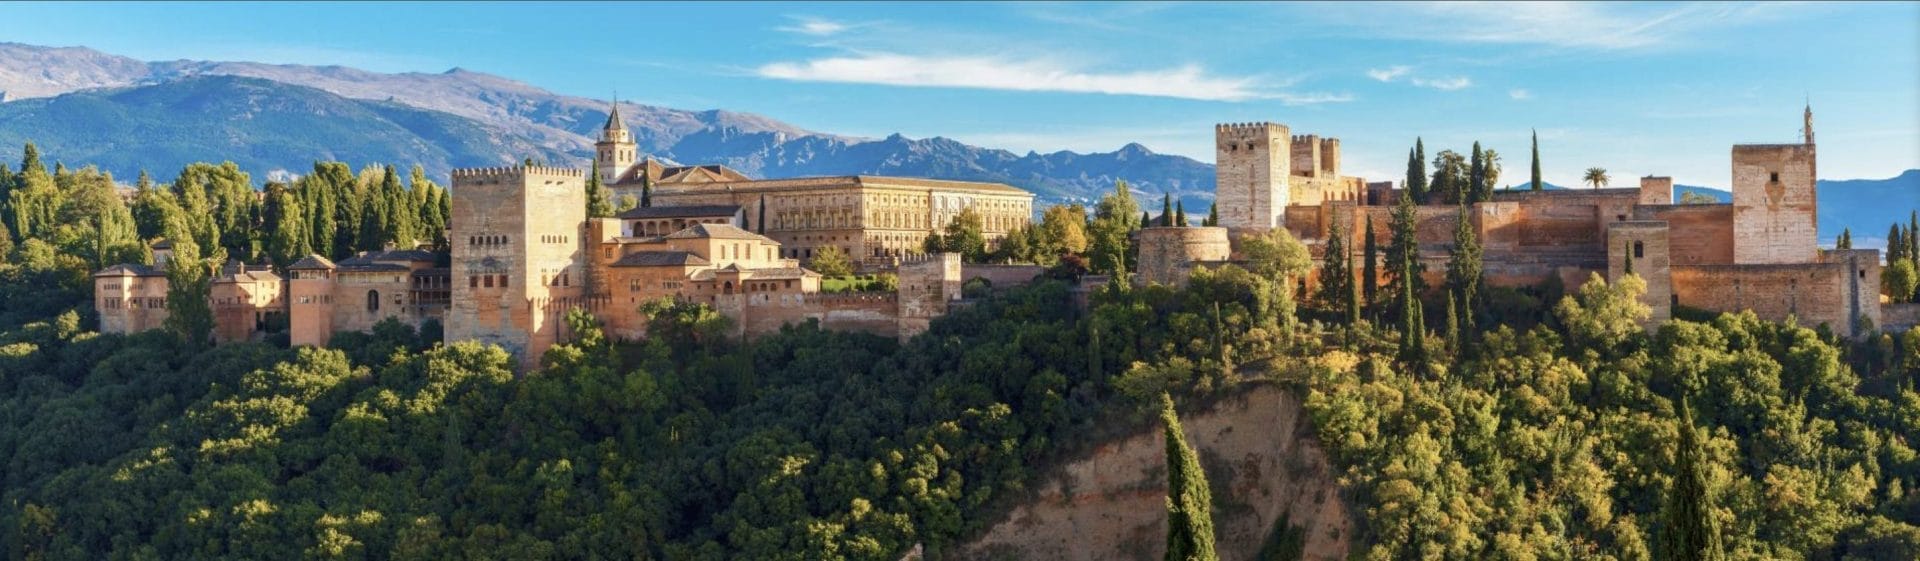 Alhambra. Granada